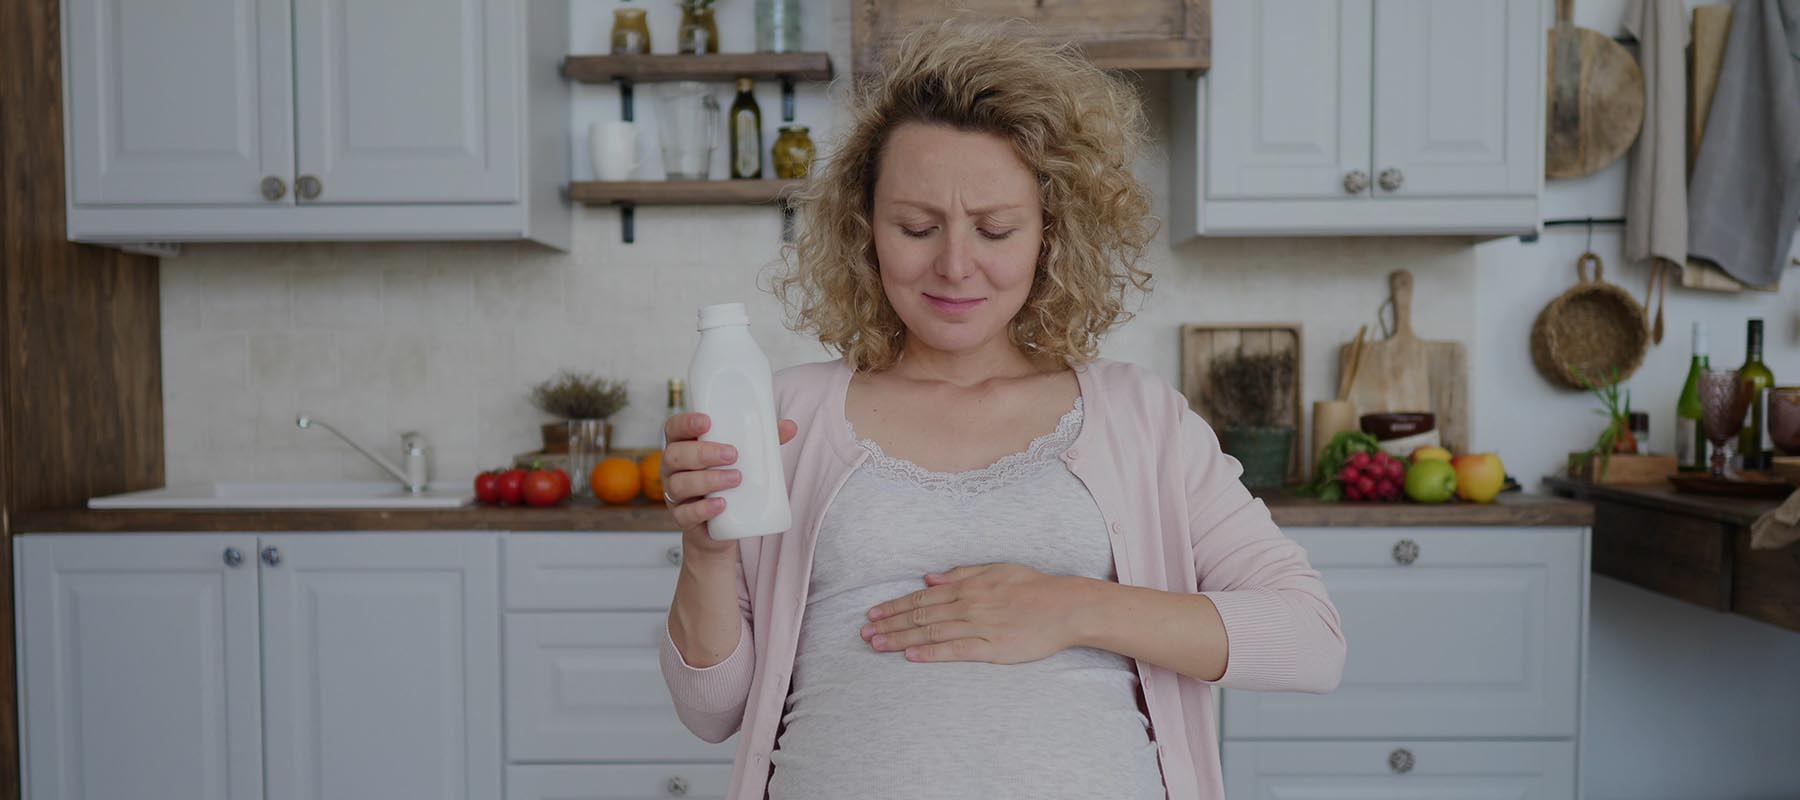 Acid Reflux & Heartburn During Pregnancy: Symptoms, Causes, Treatment